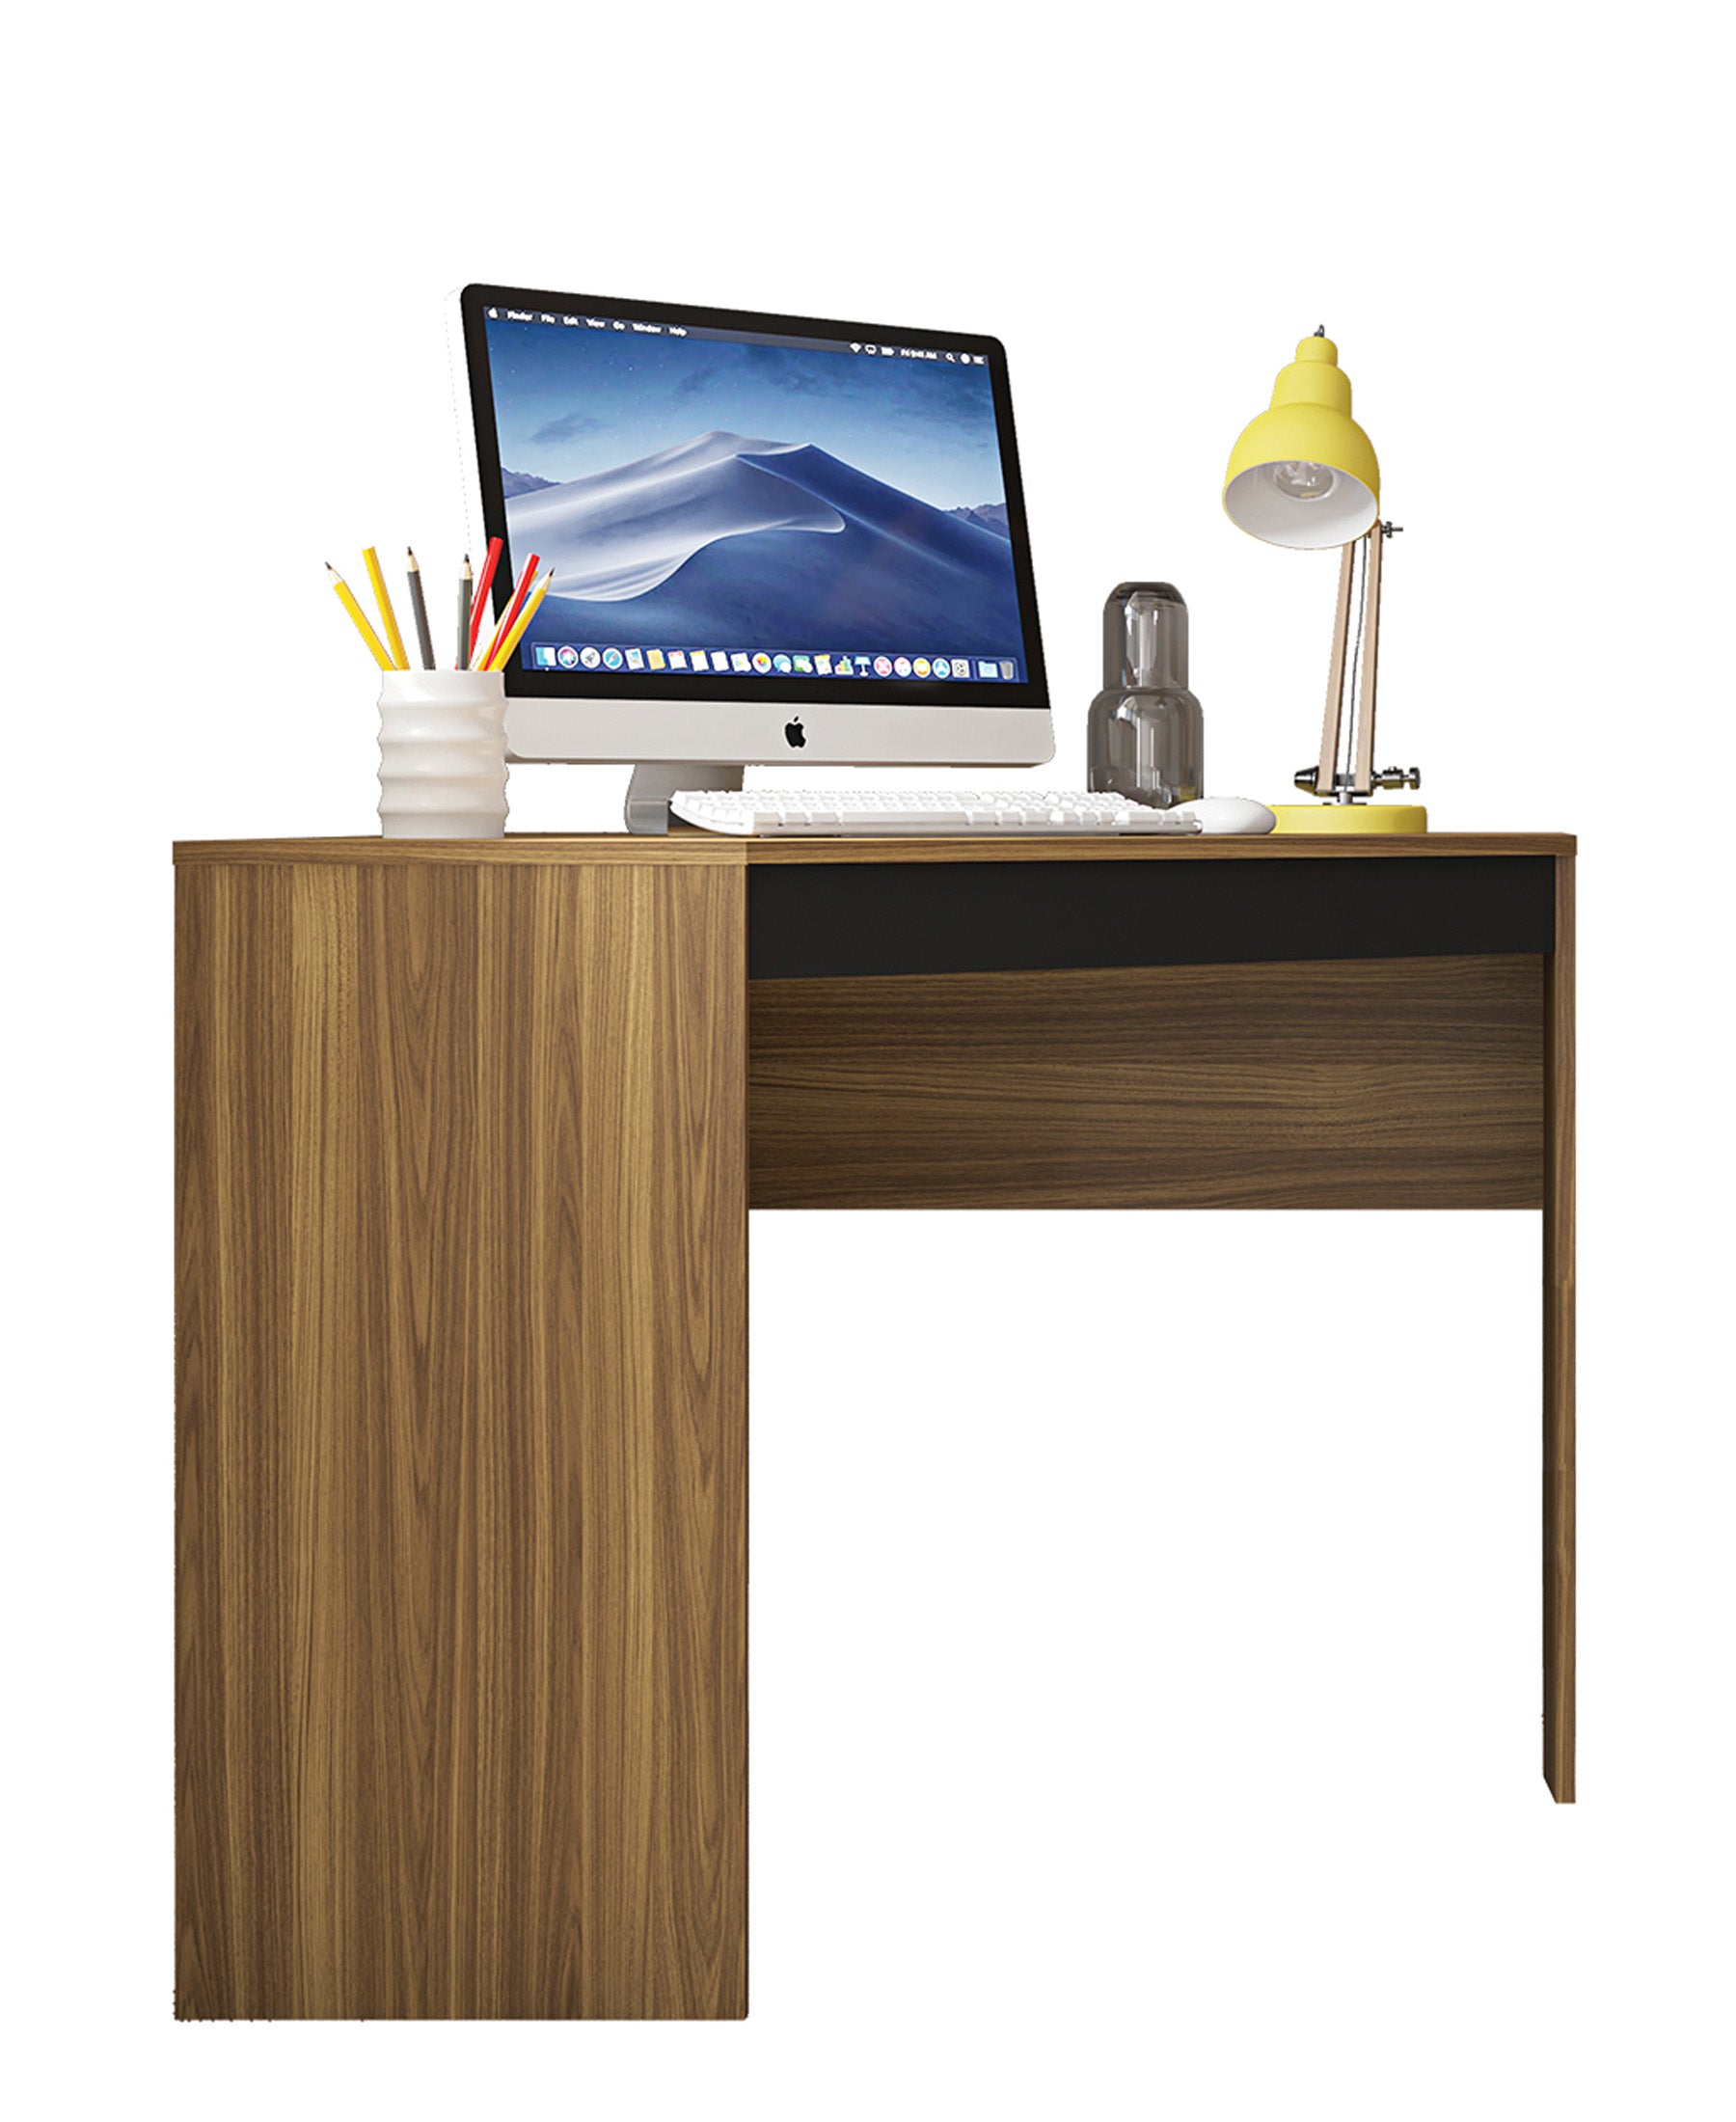 Exotic Designs Recta Corner Desk - Brown